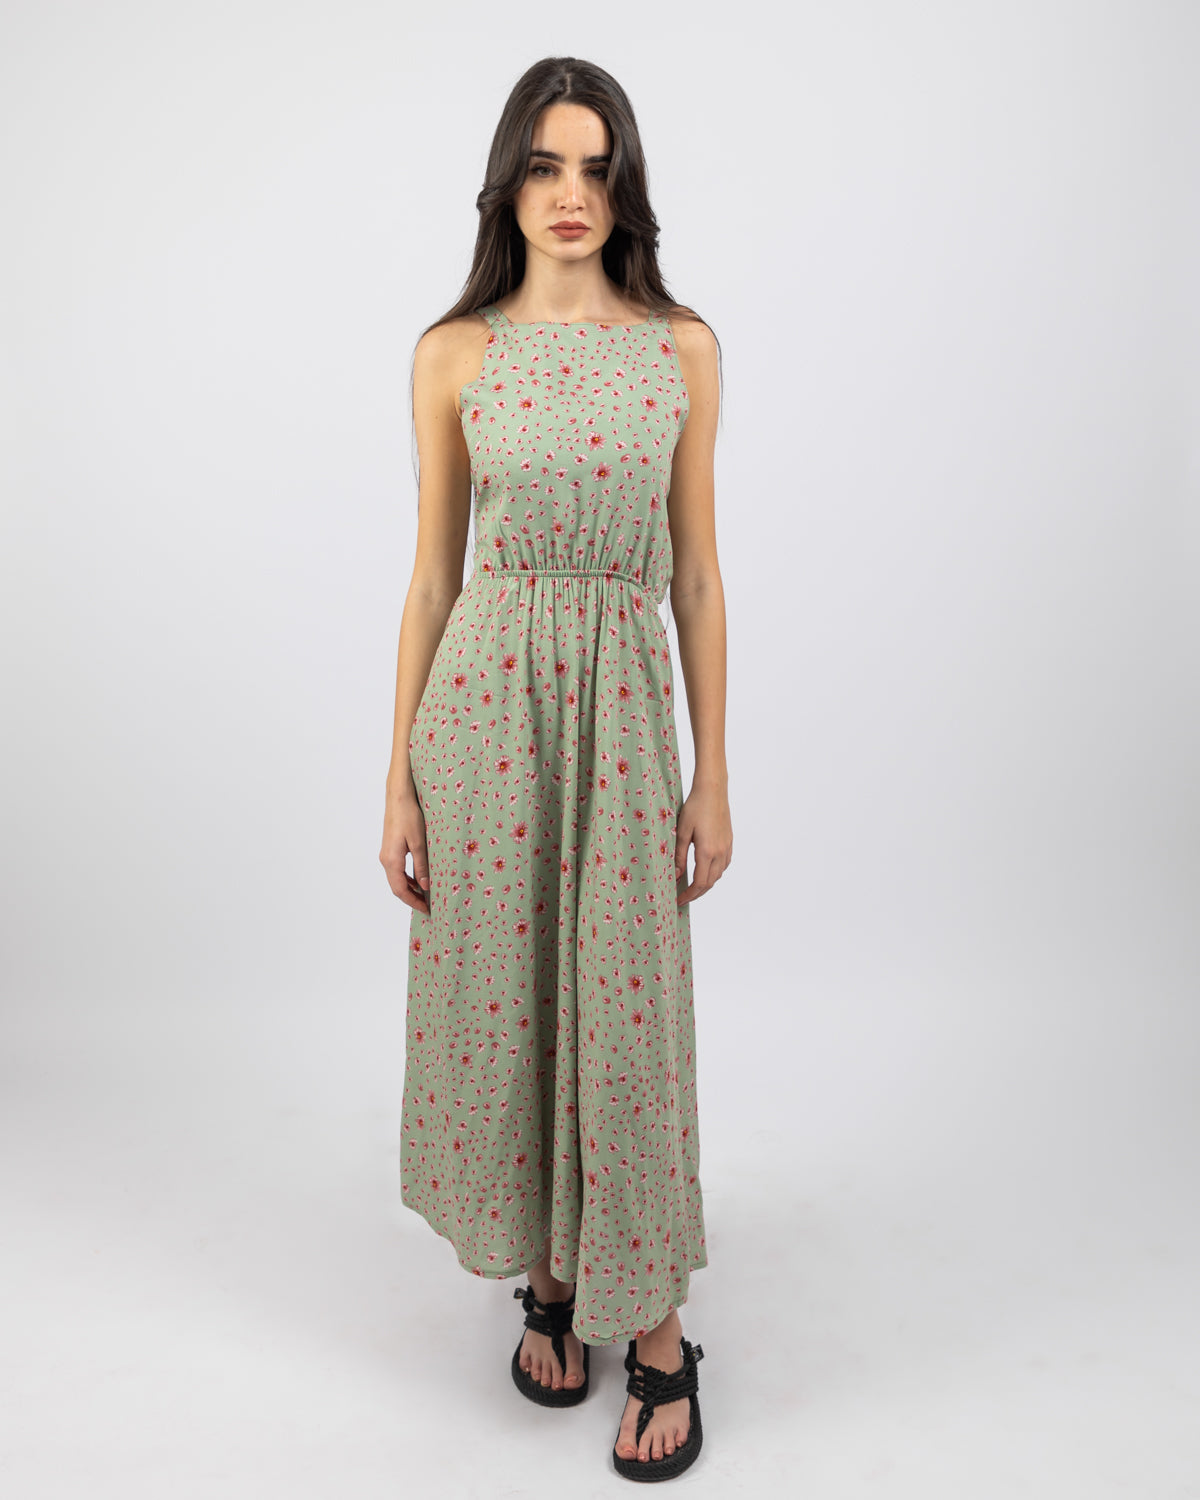 Sleeveless Floral Dress For Women - Green